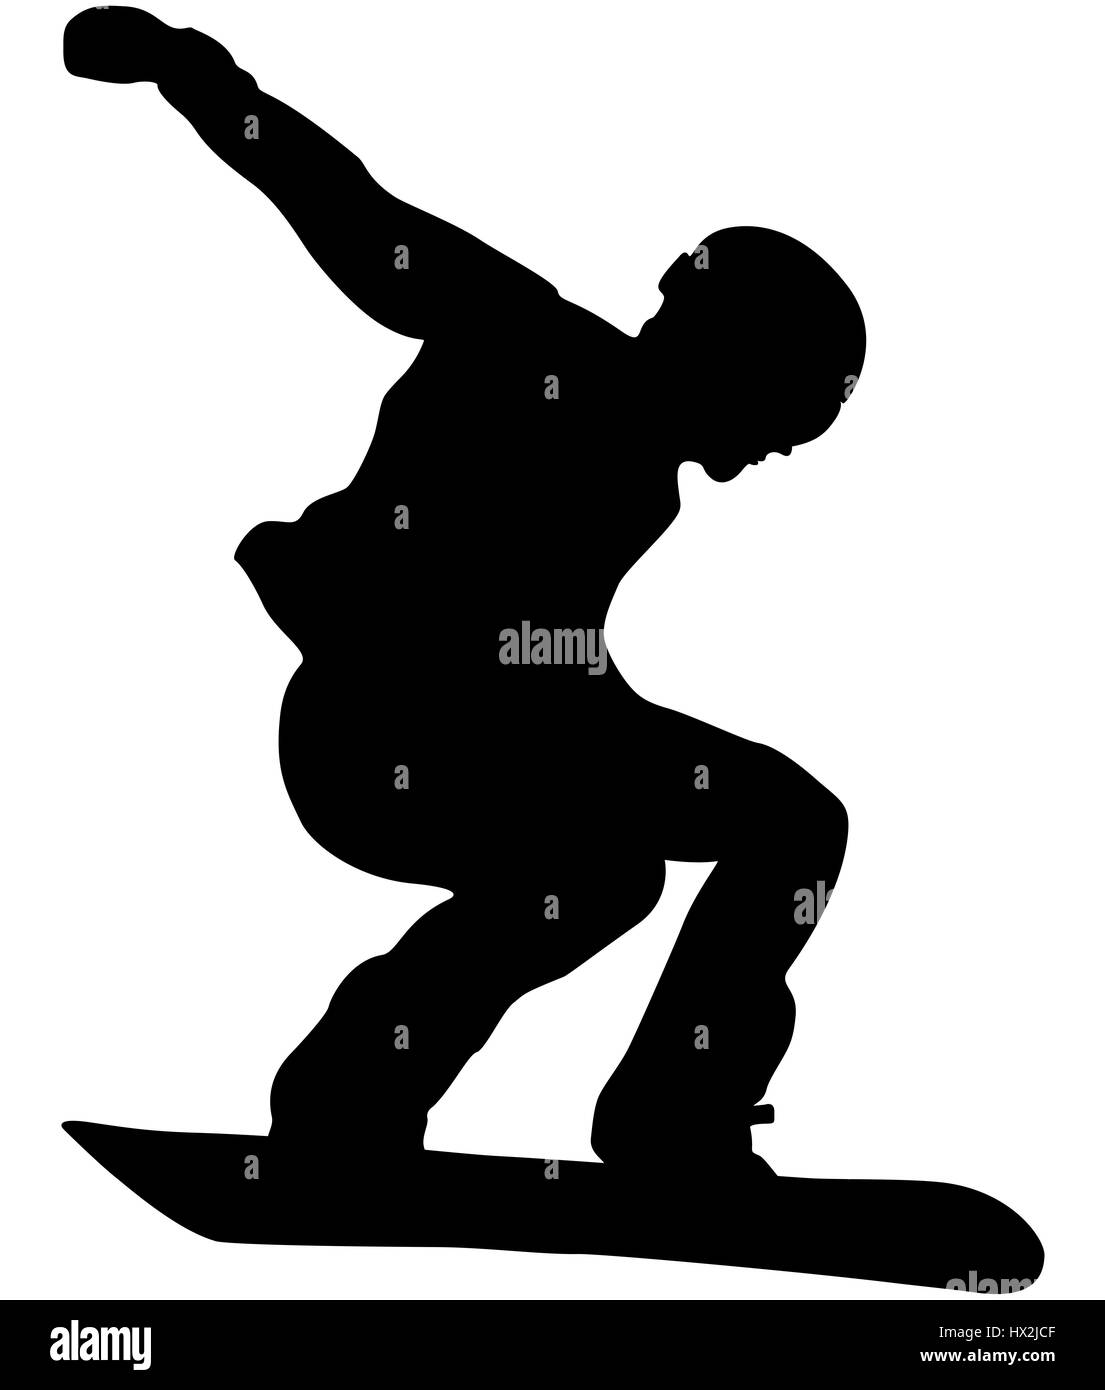 male athlete snowboarder jump black silhouette Stock Photo